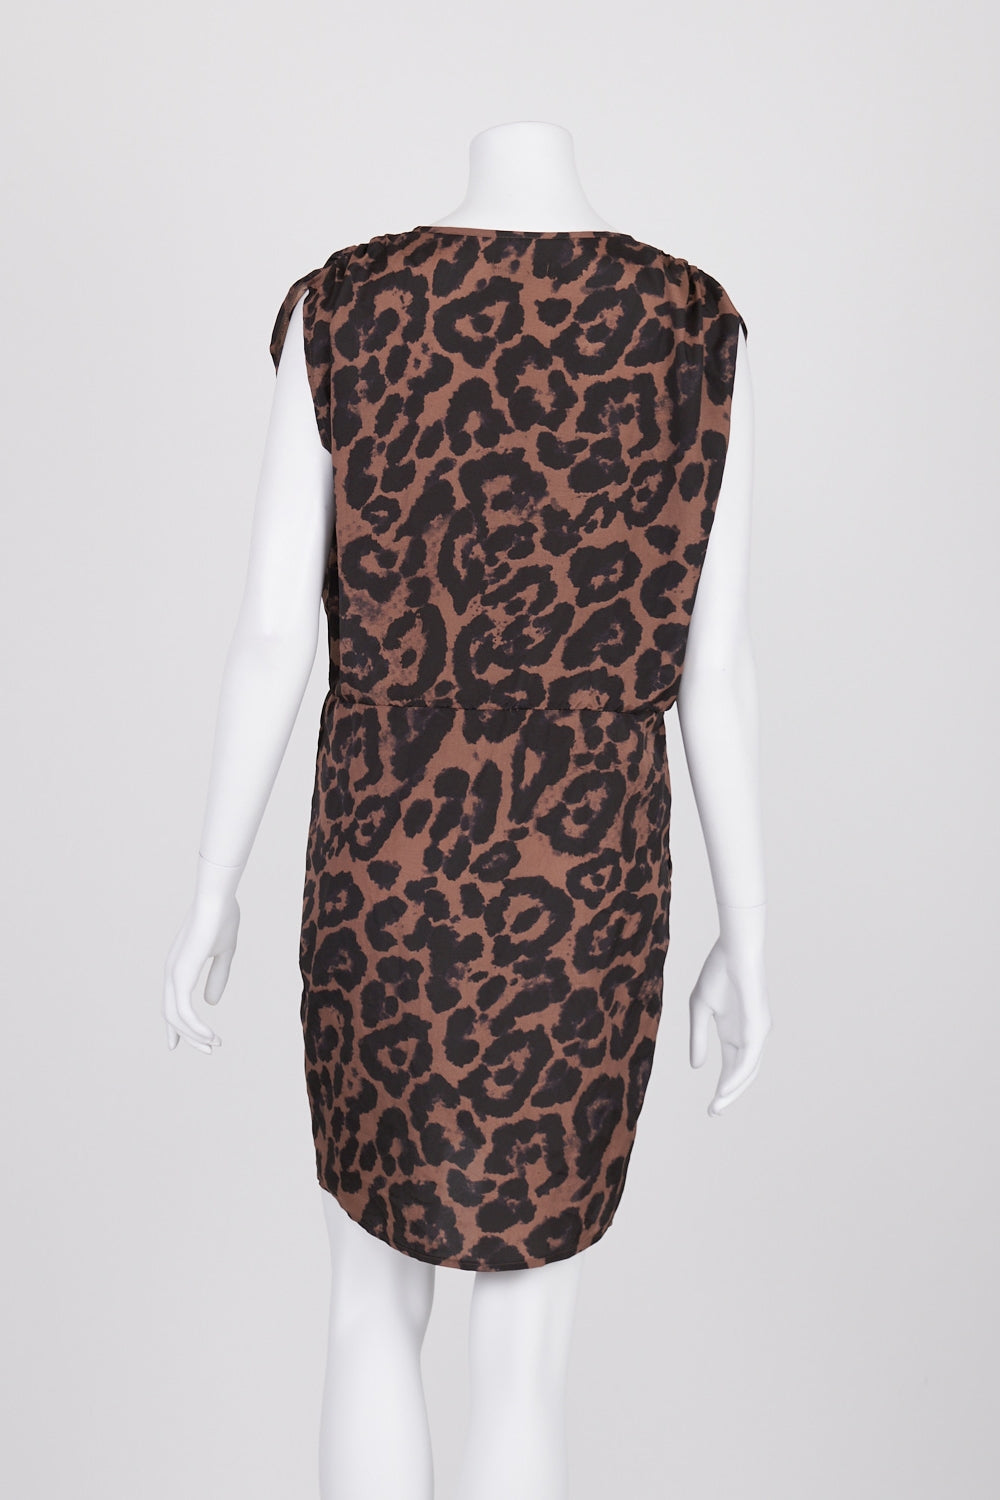 Alice & You Leopard Print Dress 12